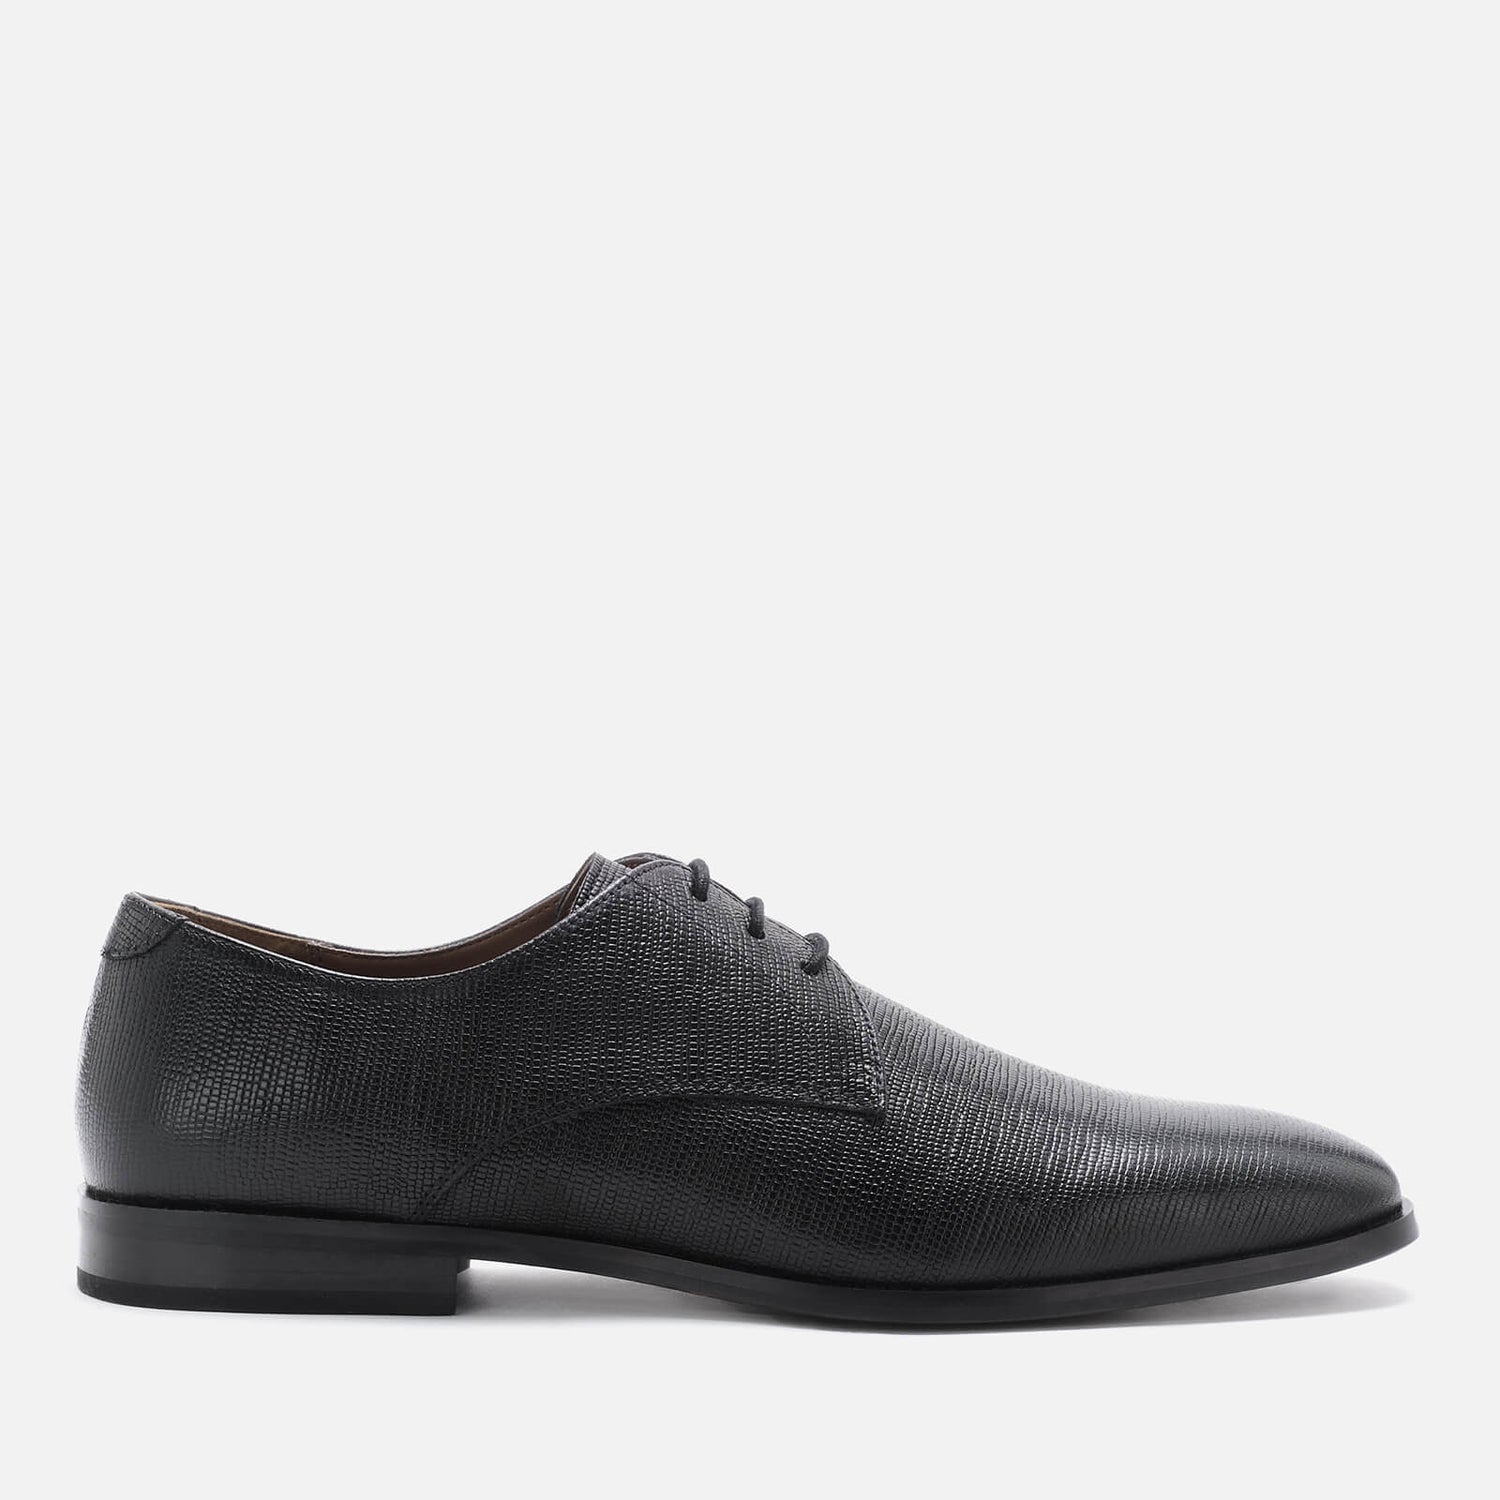 Walk London Men's Florence Etched Leather Derby Shoes - Black - UK 8